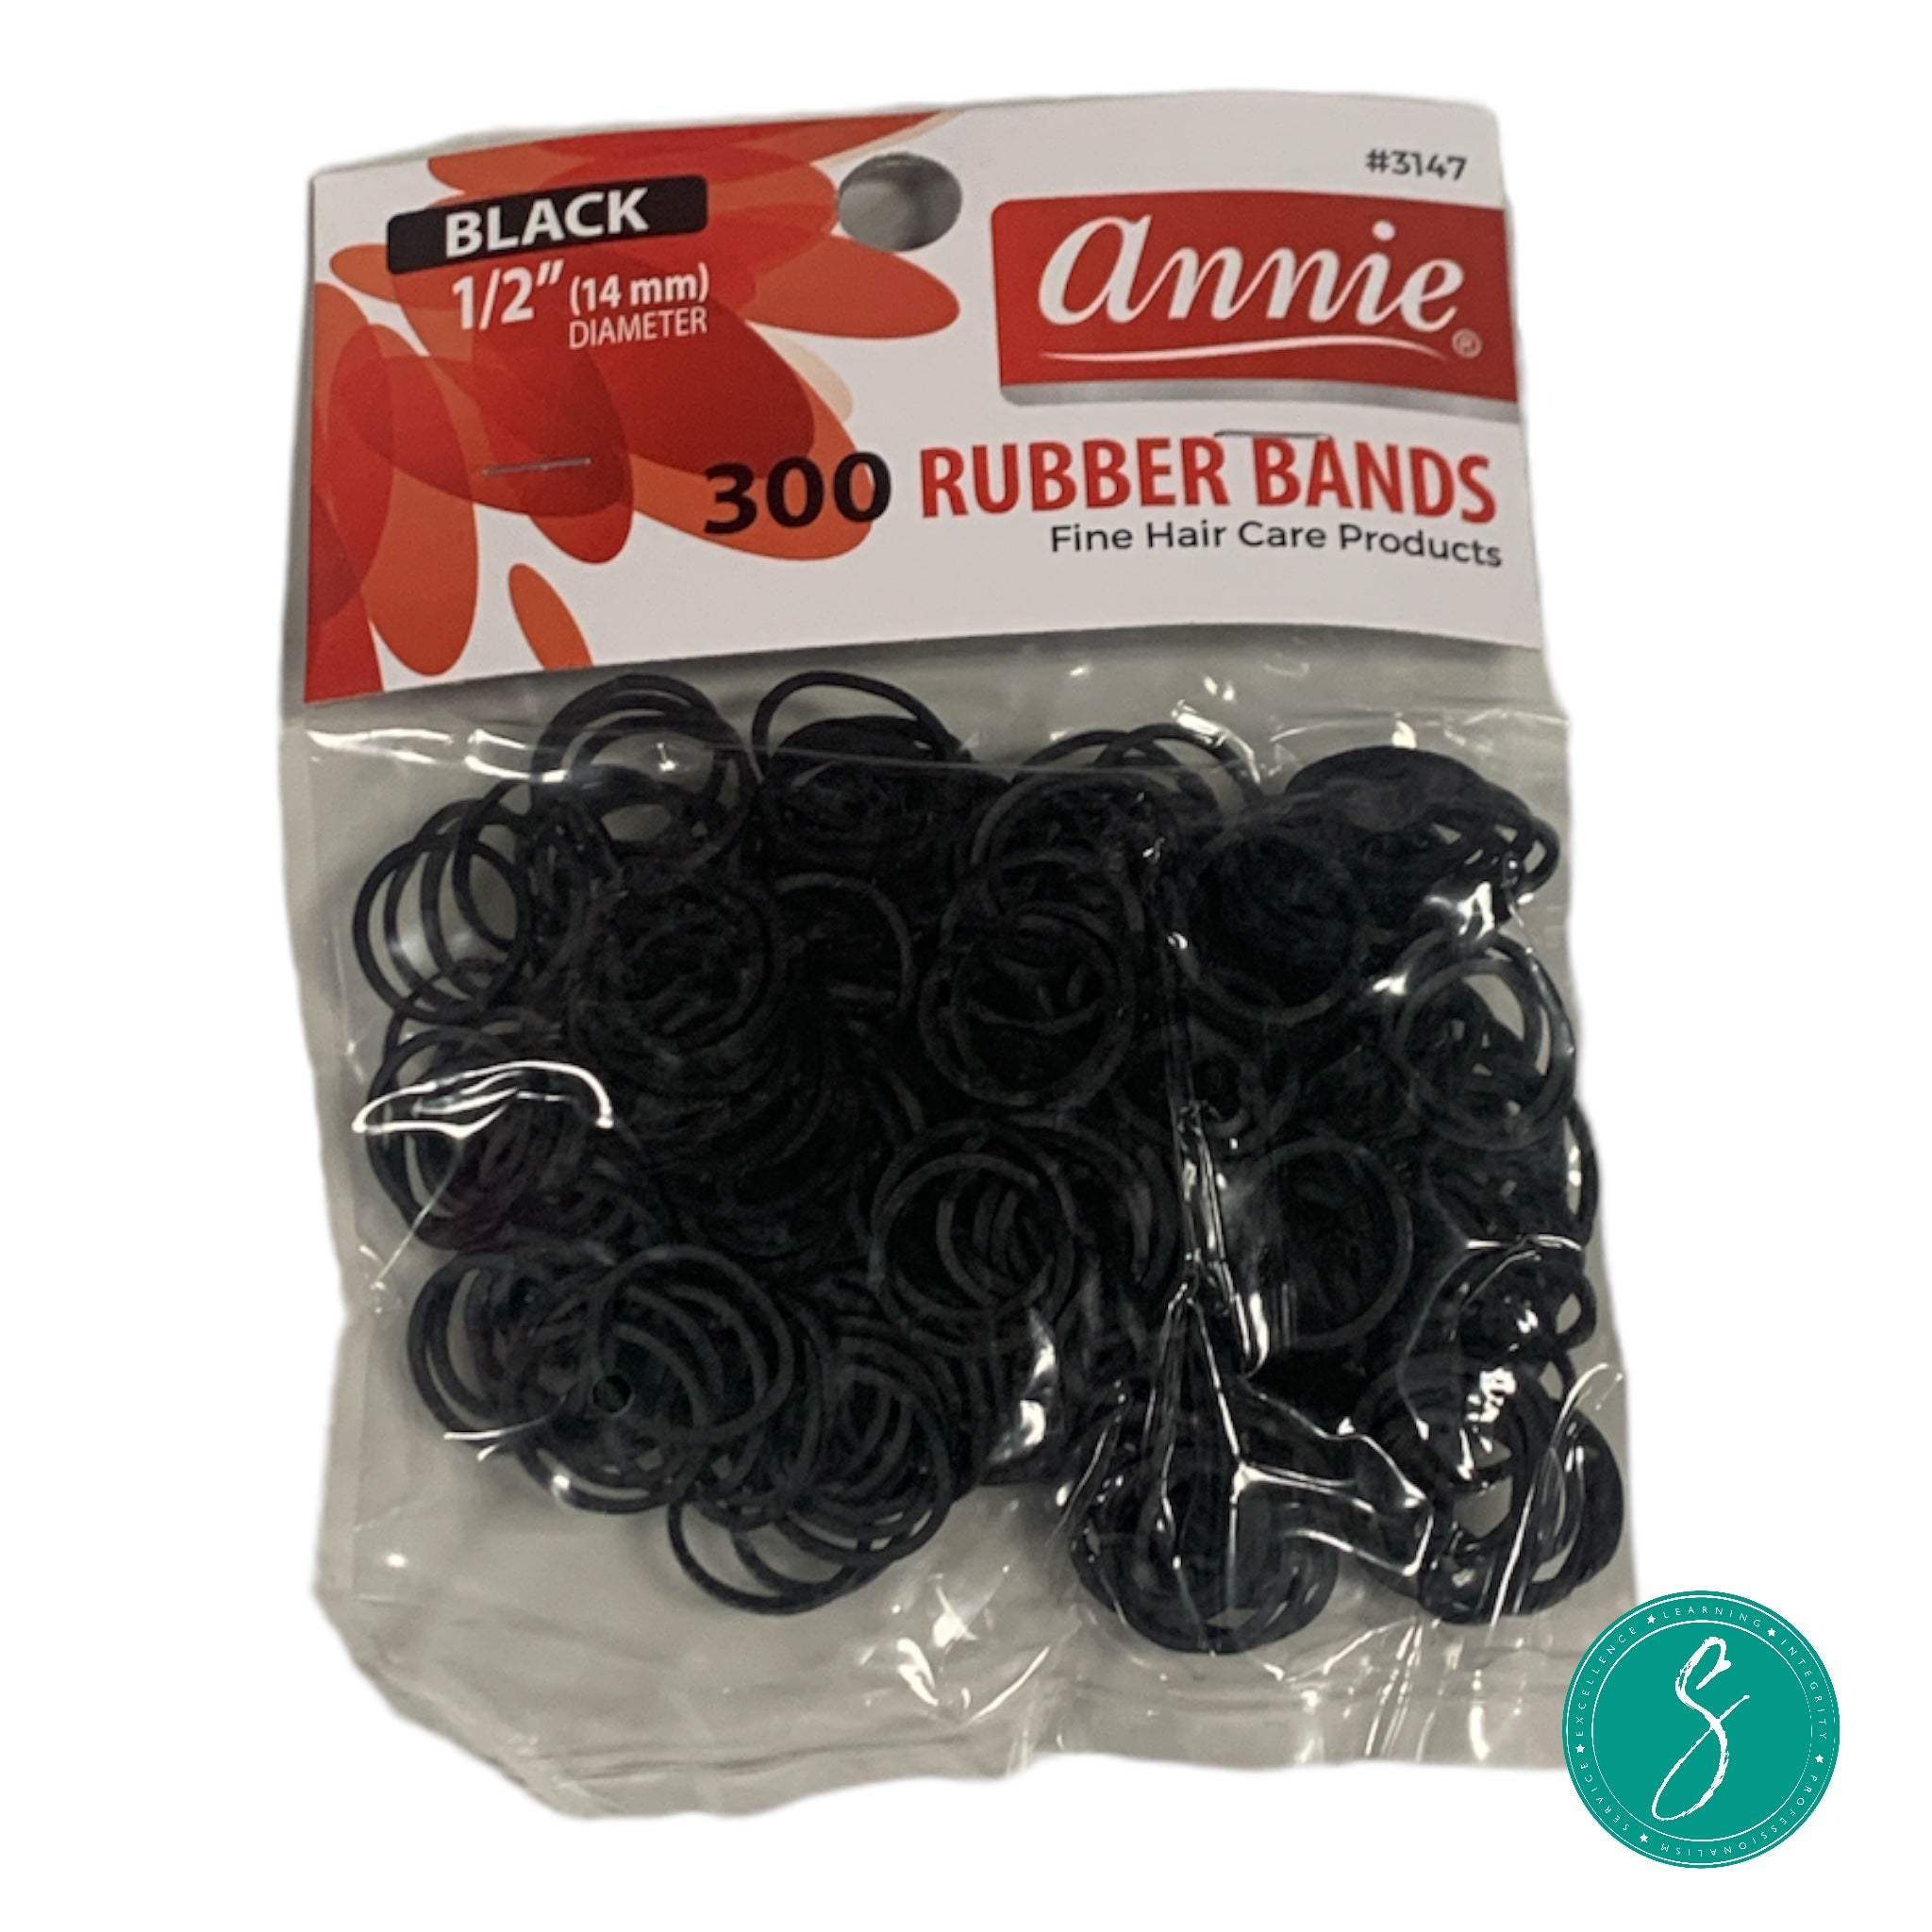 Annie 300 Black Rubber Bands